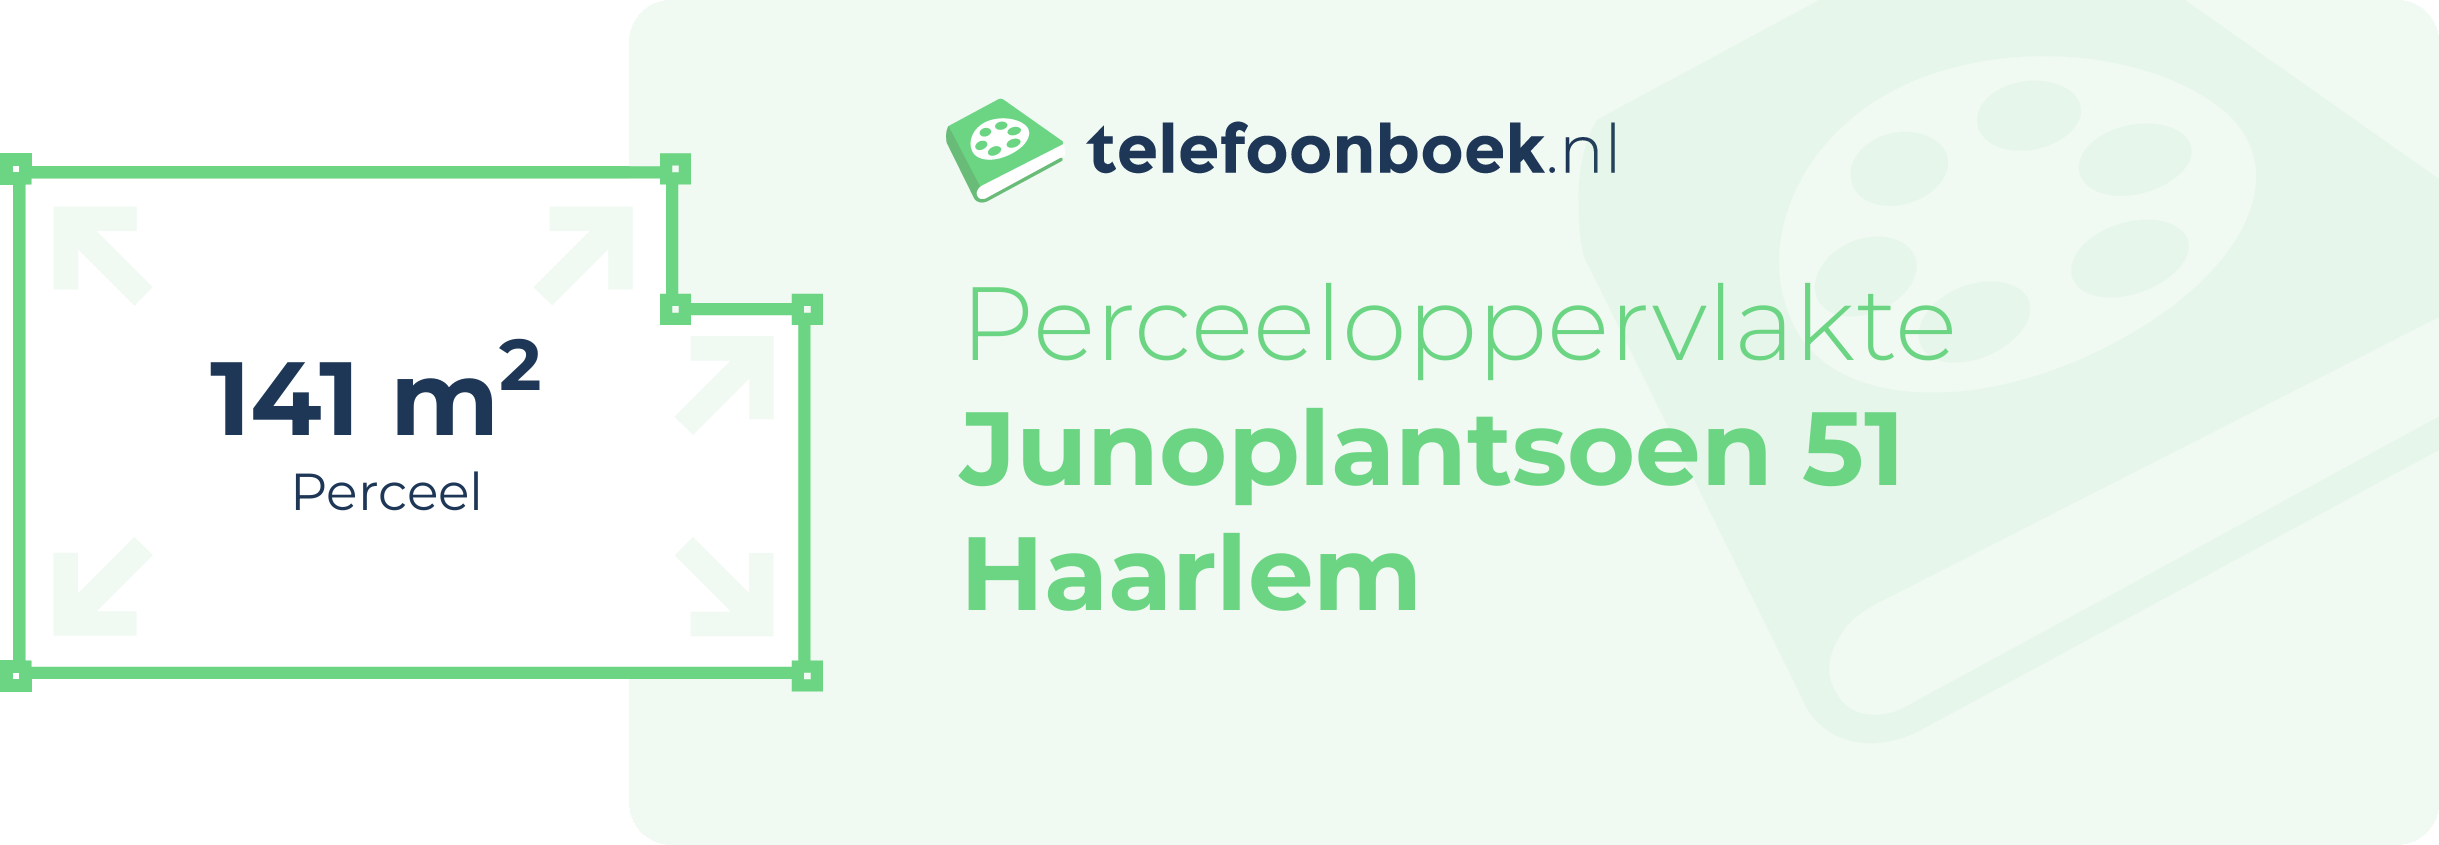 Perceeloppervlakte Junoplantsoen 51 Haarlem